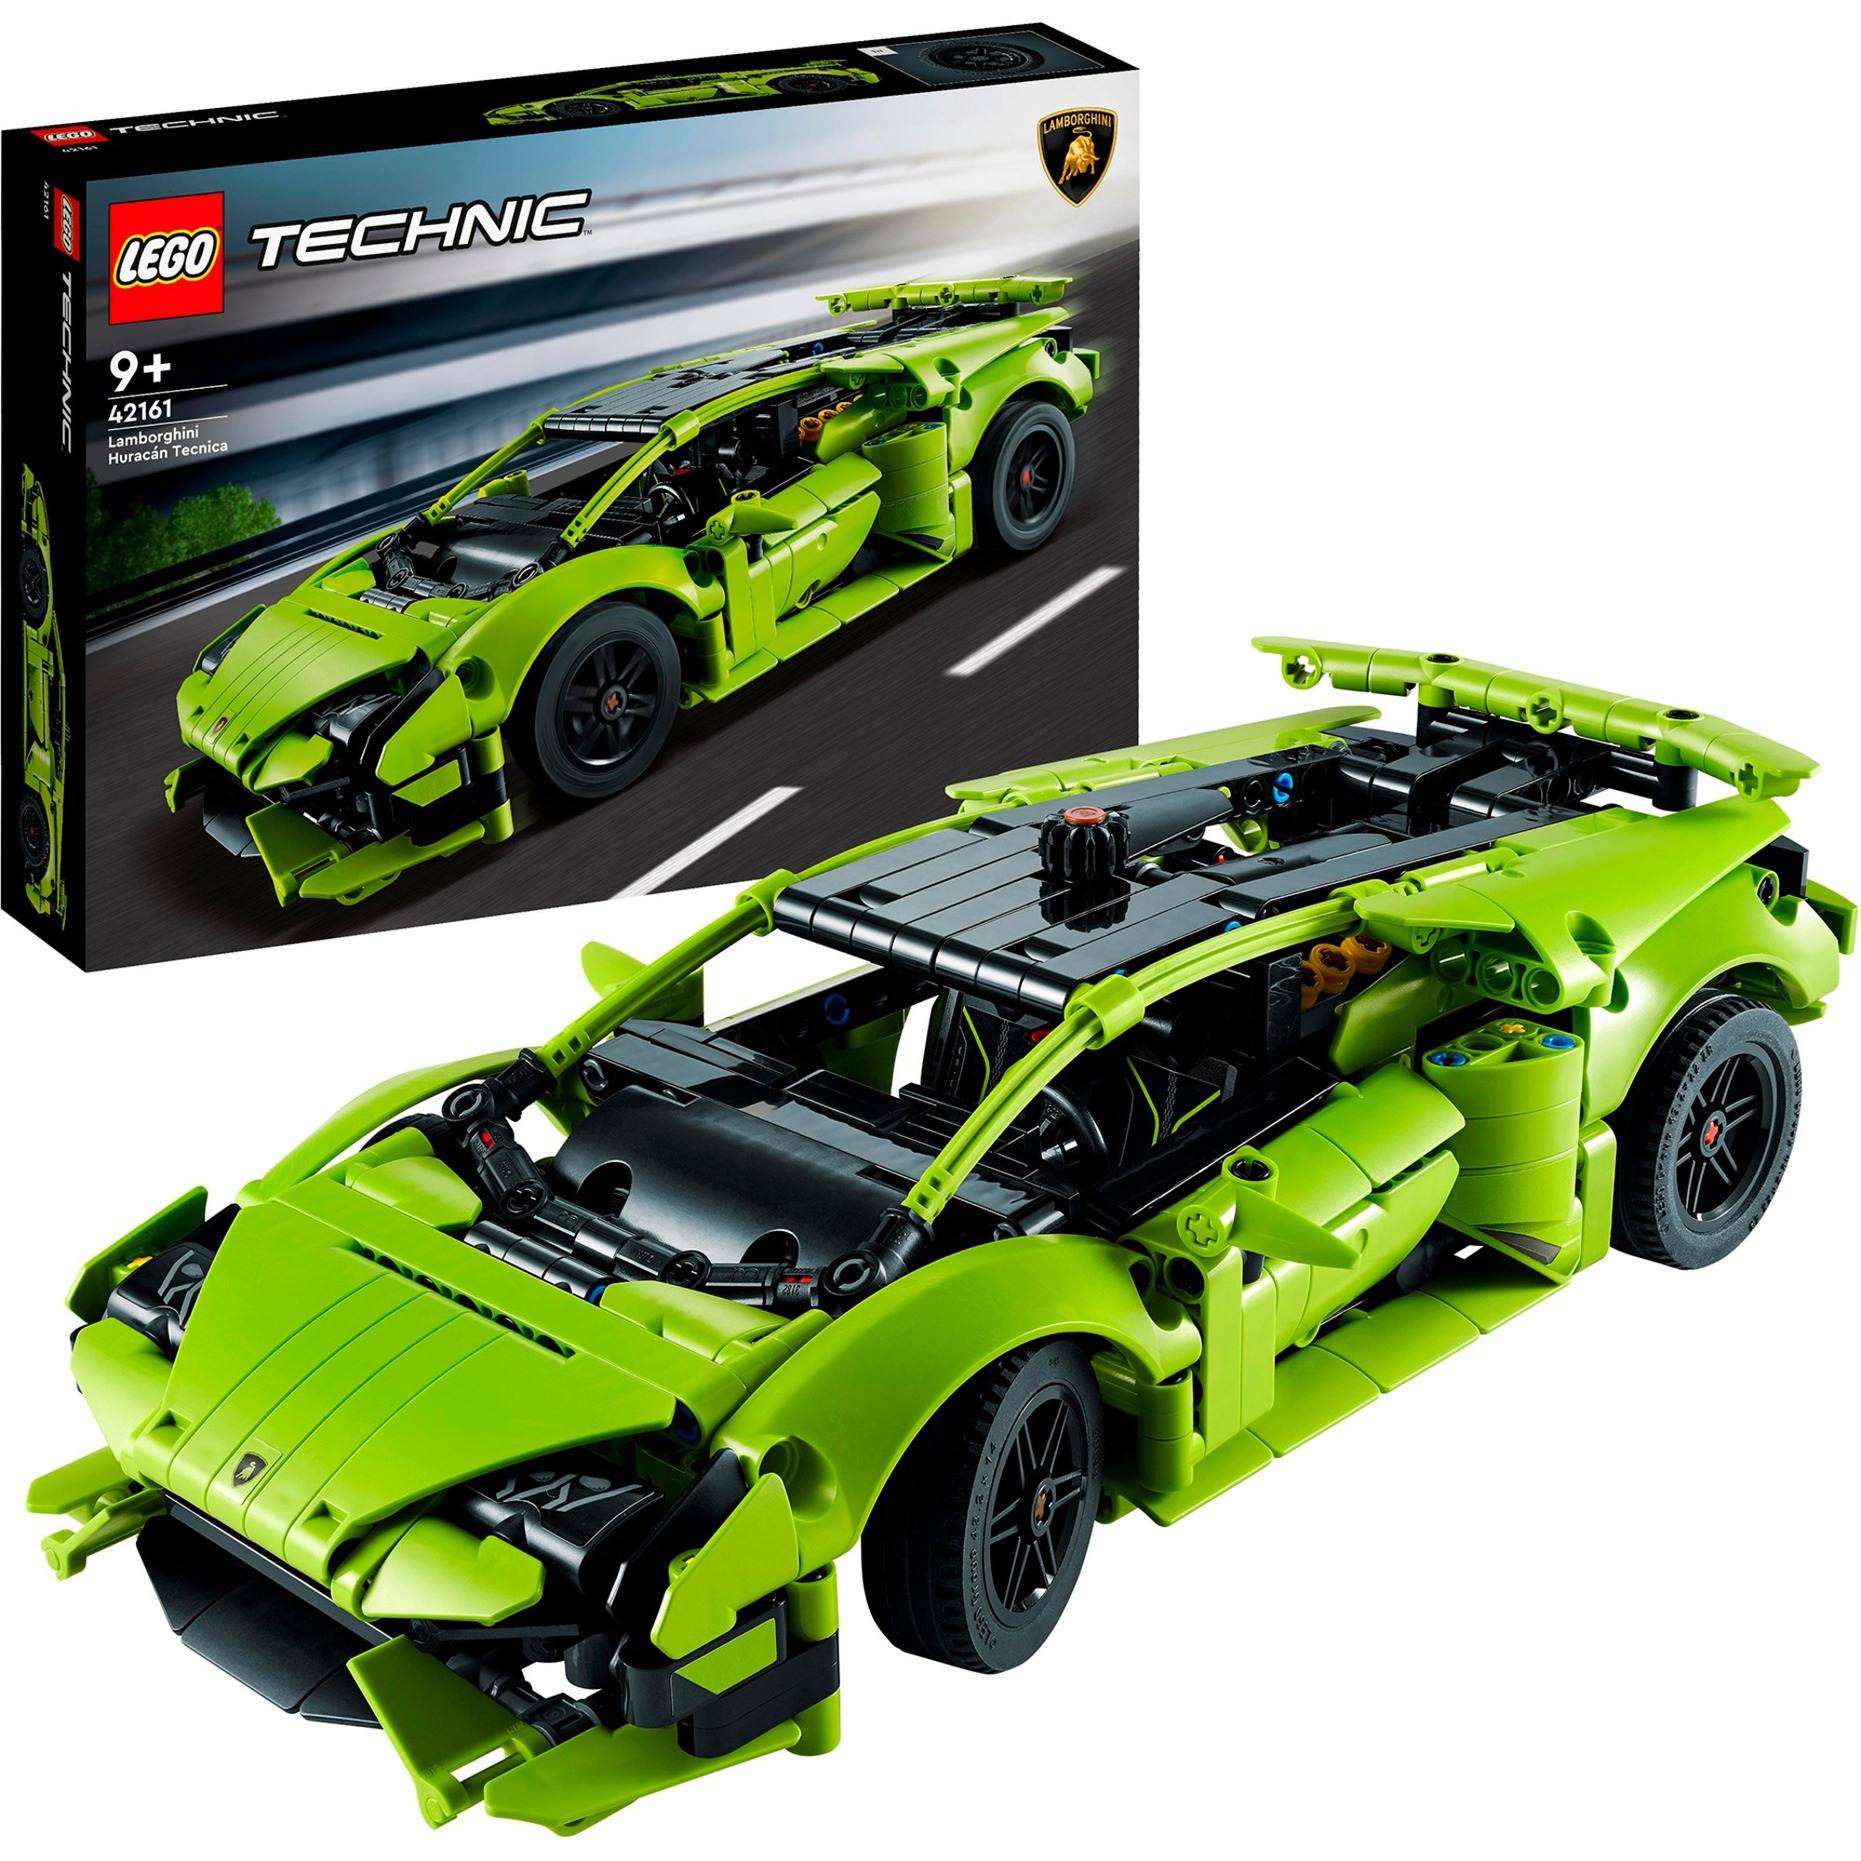 42161 Technic Lamborghini Huracán Tecnica, Konstruktionsspielzeug von Lego